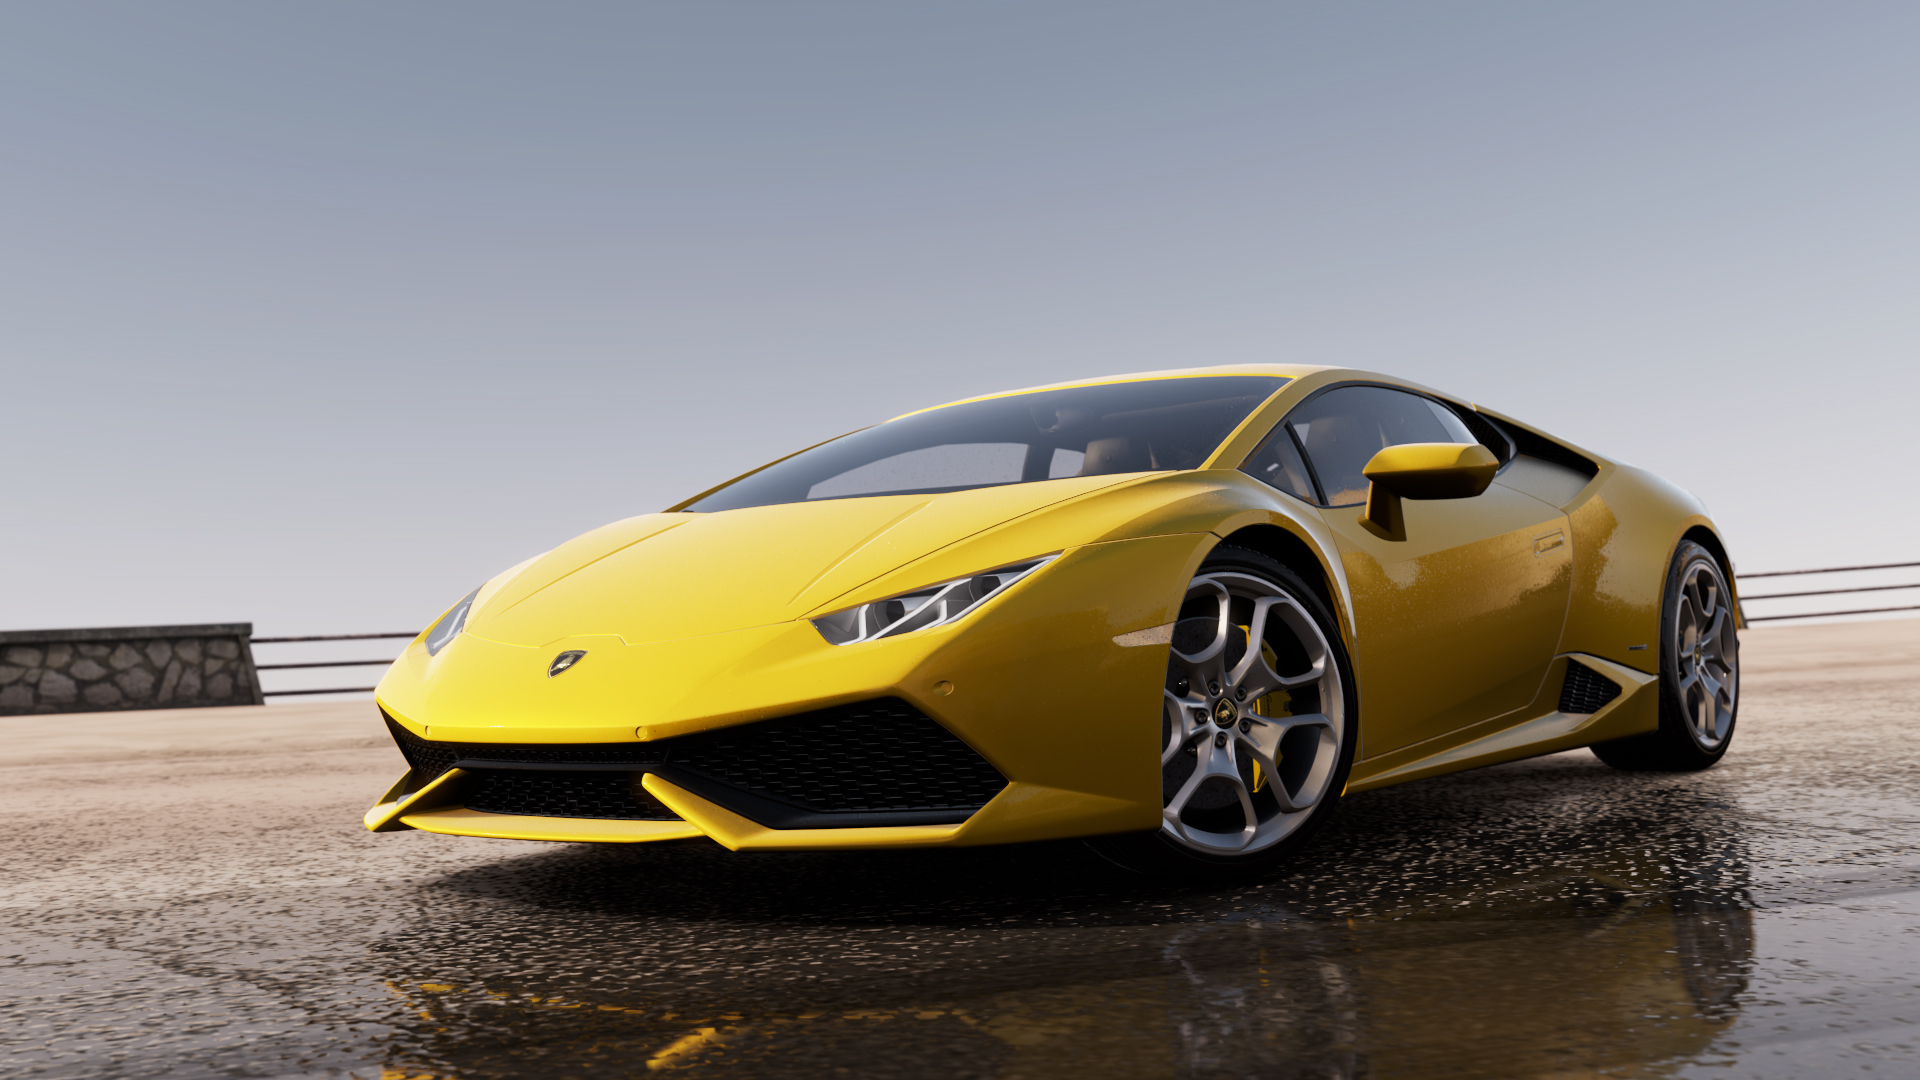 General 1920x1080 yellow cars Lamborghini Lamborghini Huracan video games Xbox Xbox One Forza Forza Horizon 2 water vehicle render supercars reflection Turn 10 Studios